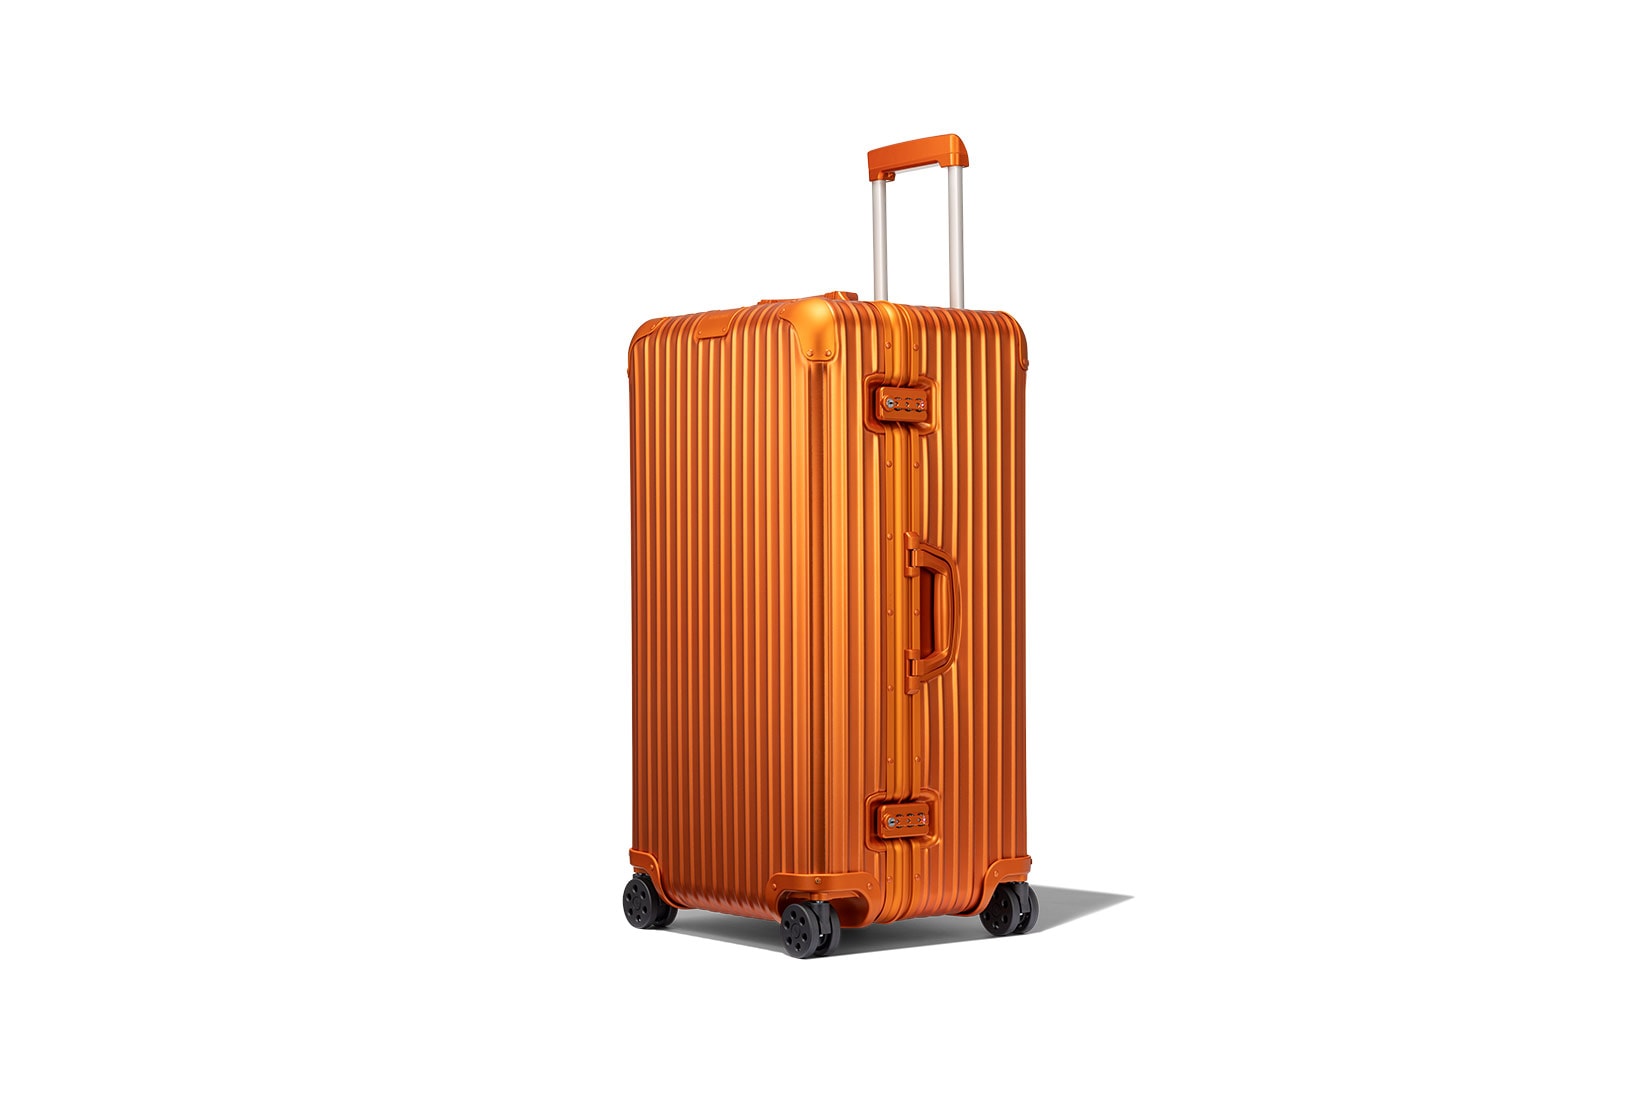 rimowa aluminium original collection new colorways mars orange trunk plus suitcase luggage handle side view